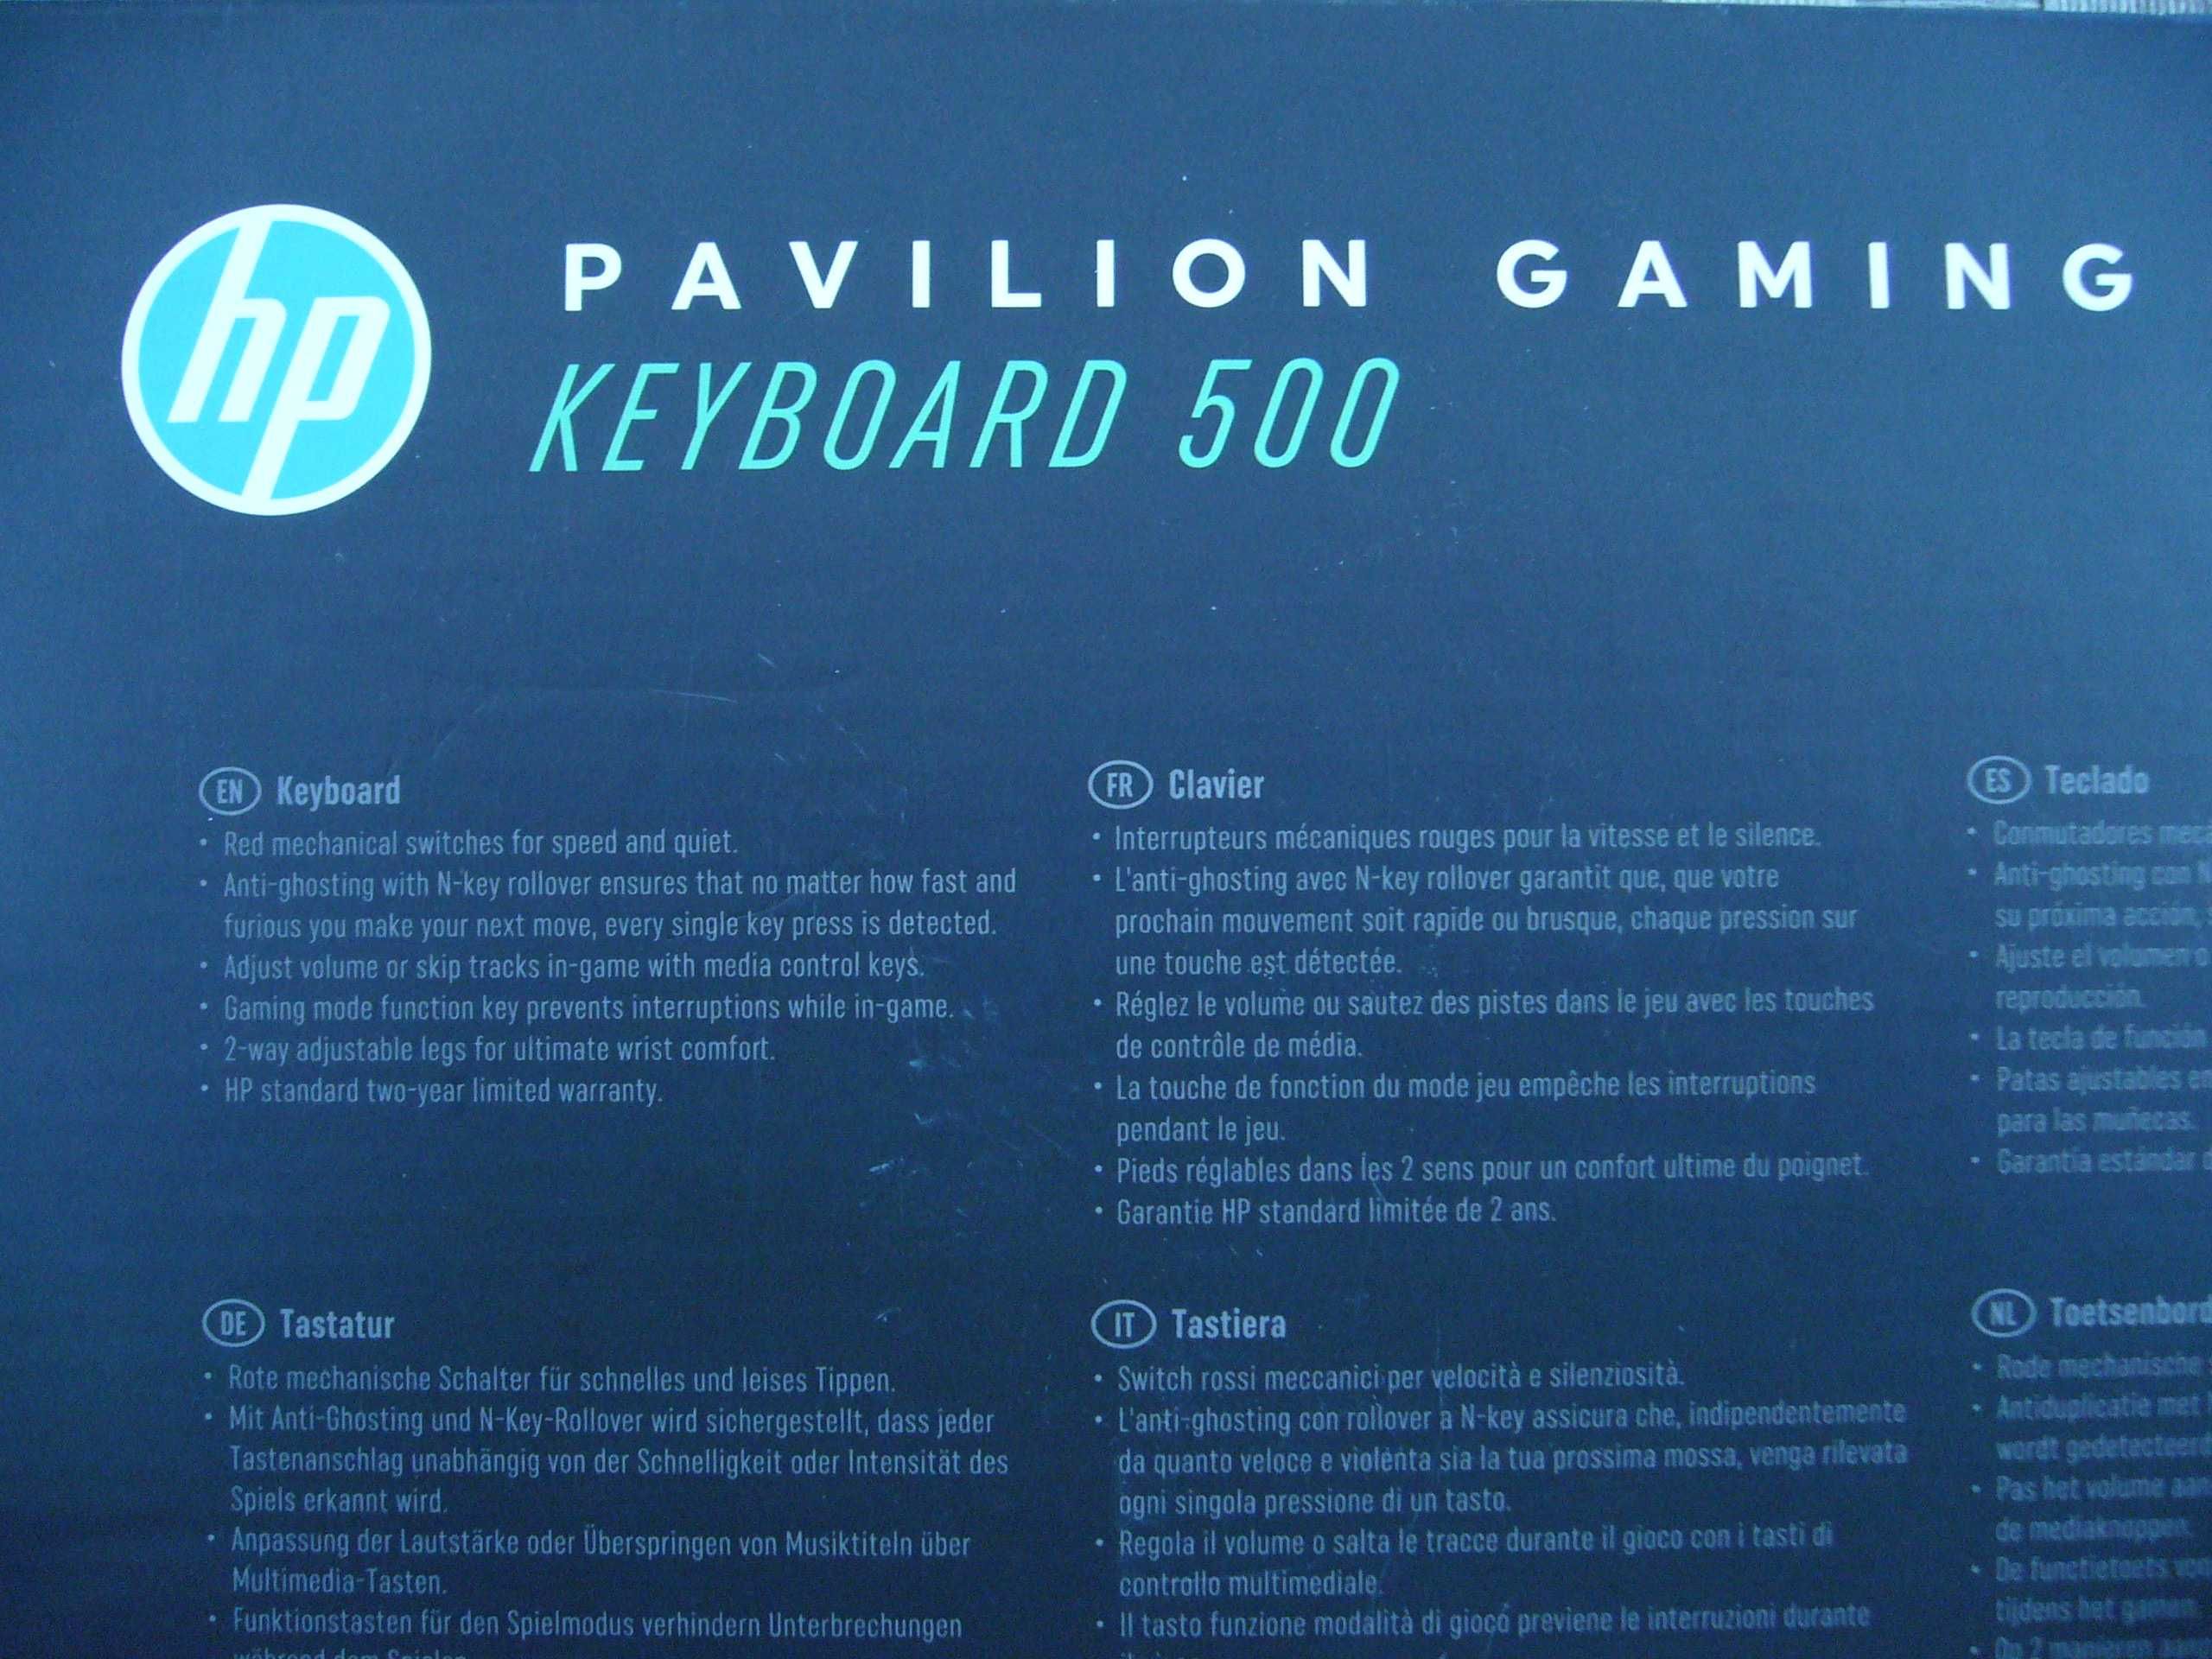 Vendo Pavilion Gaming Keyboard 500 e dois  Ratos Retroiluminados